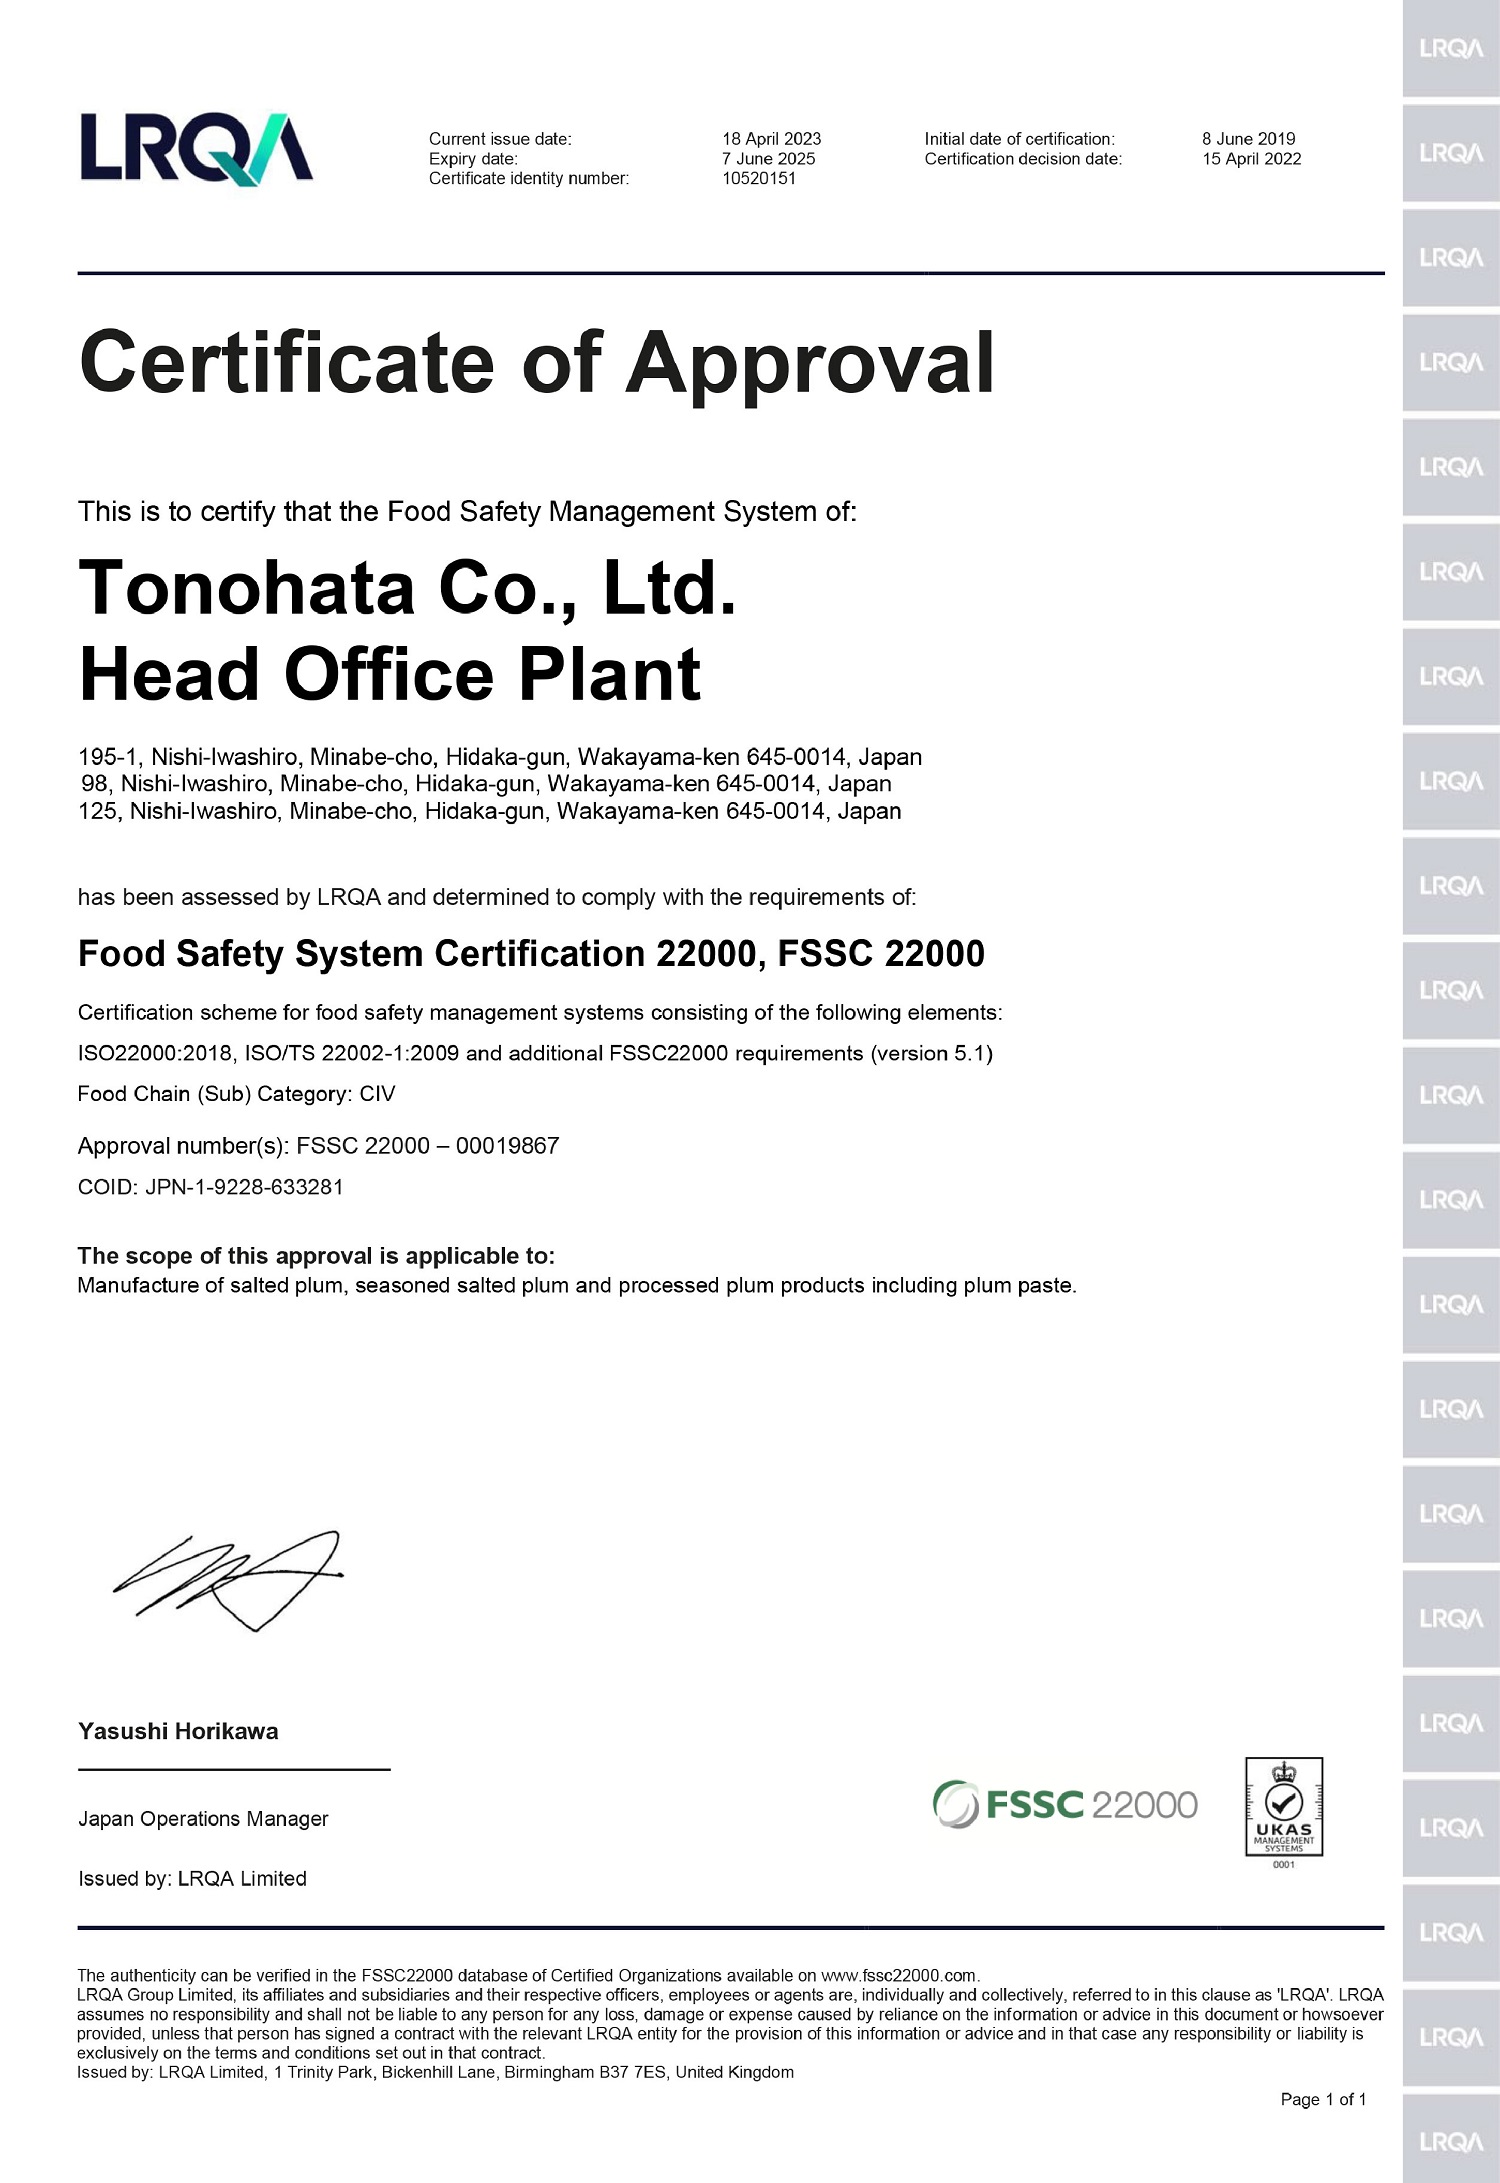 Acquisition of FSSC22000 Certification